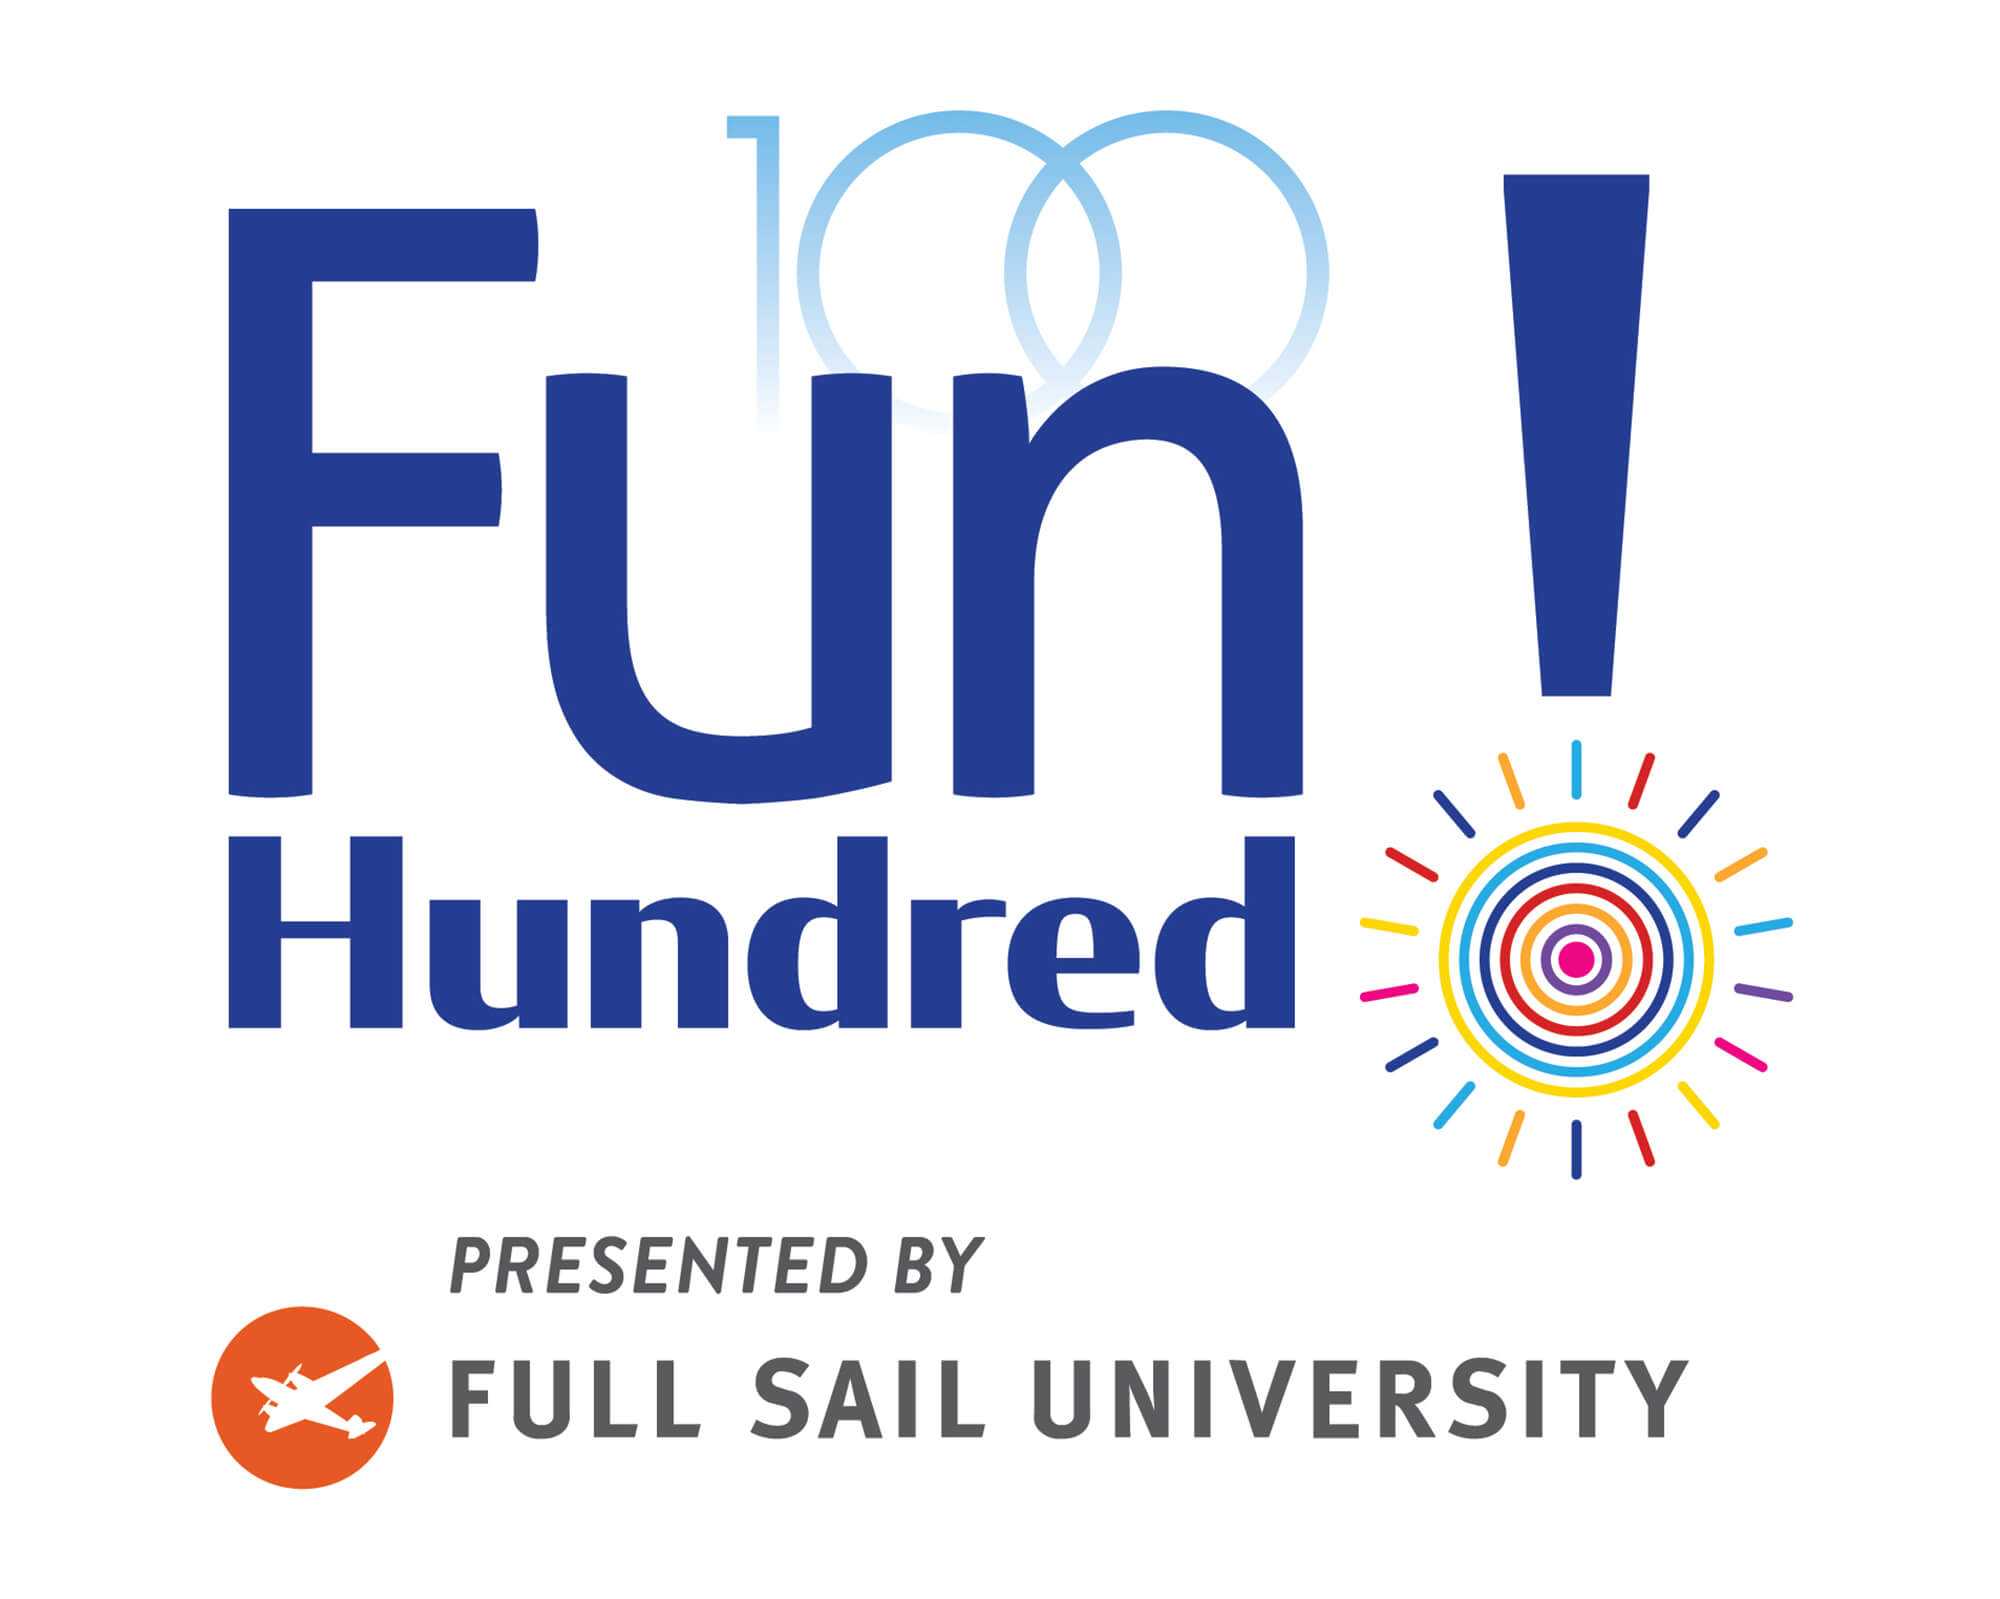 The FunHundred! logo above the Full Sail University logo